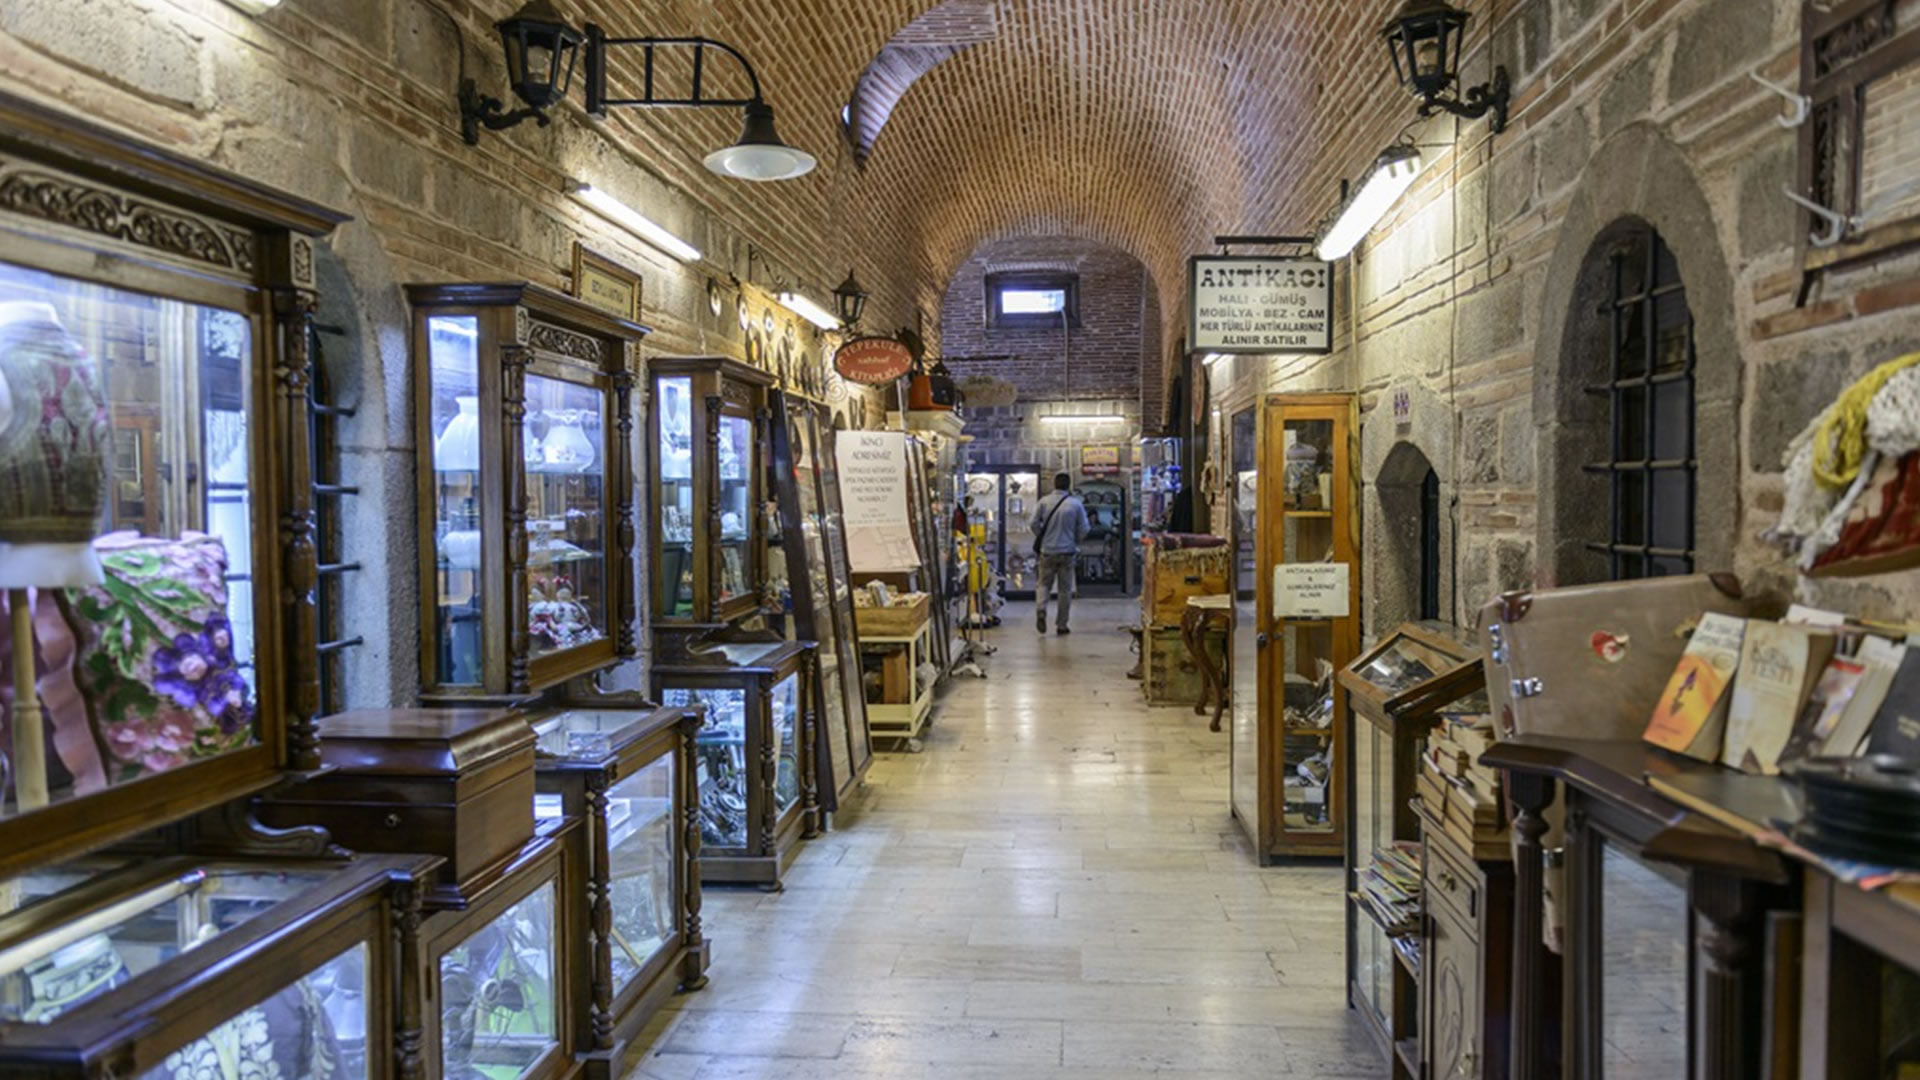 Where to Start Exploring Izmir's Historical Kemeraltı Bazaar ?